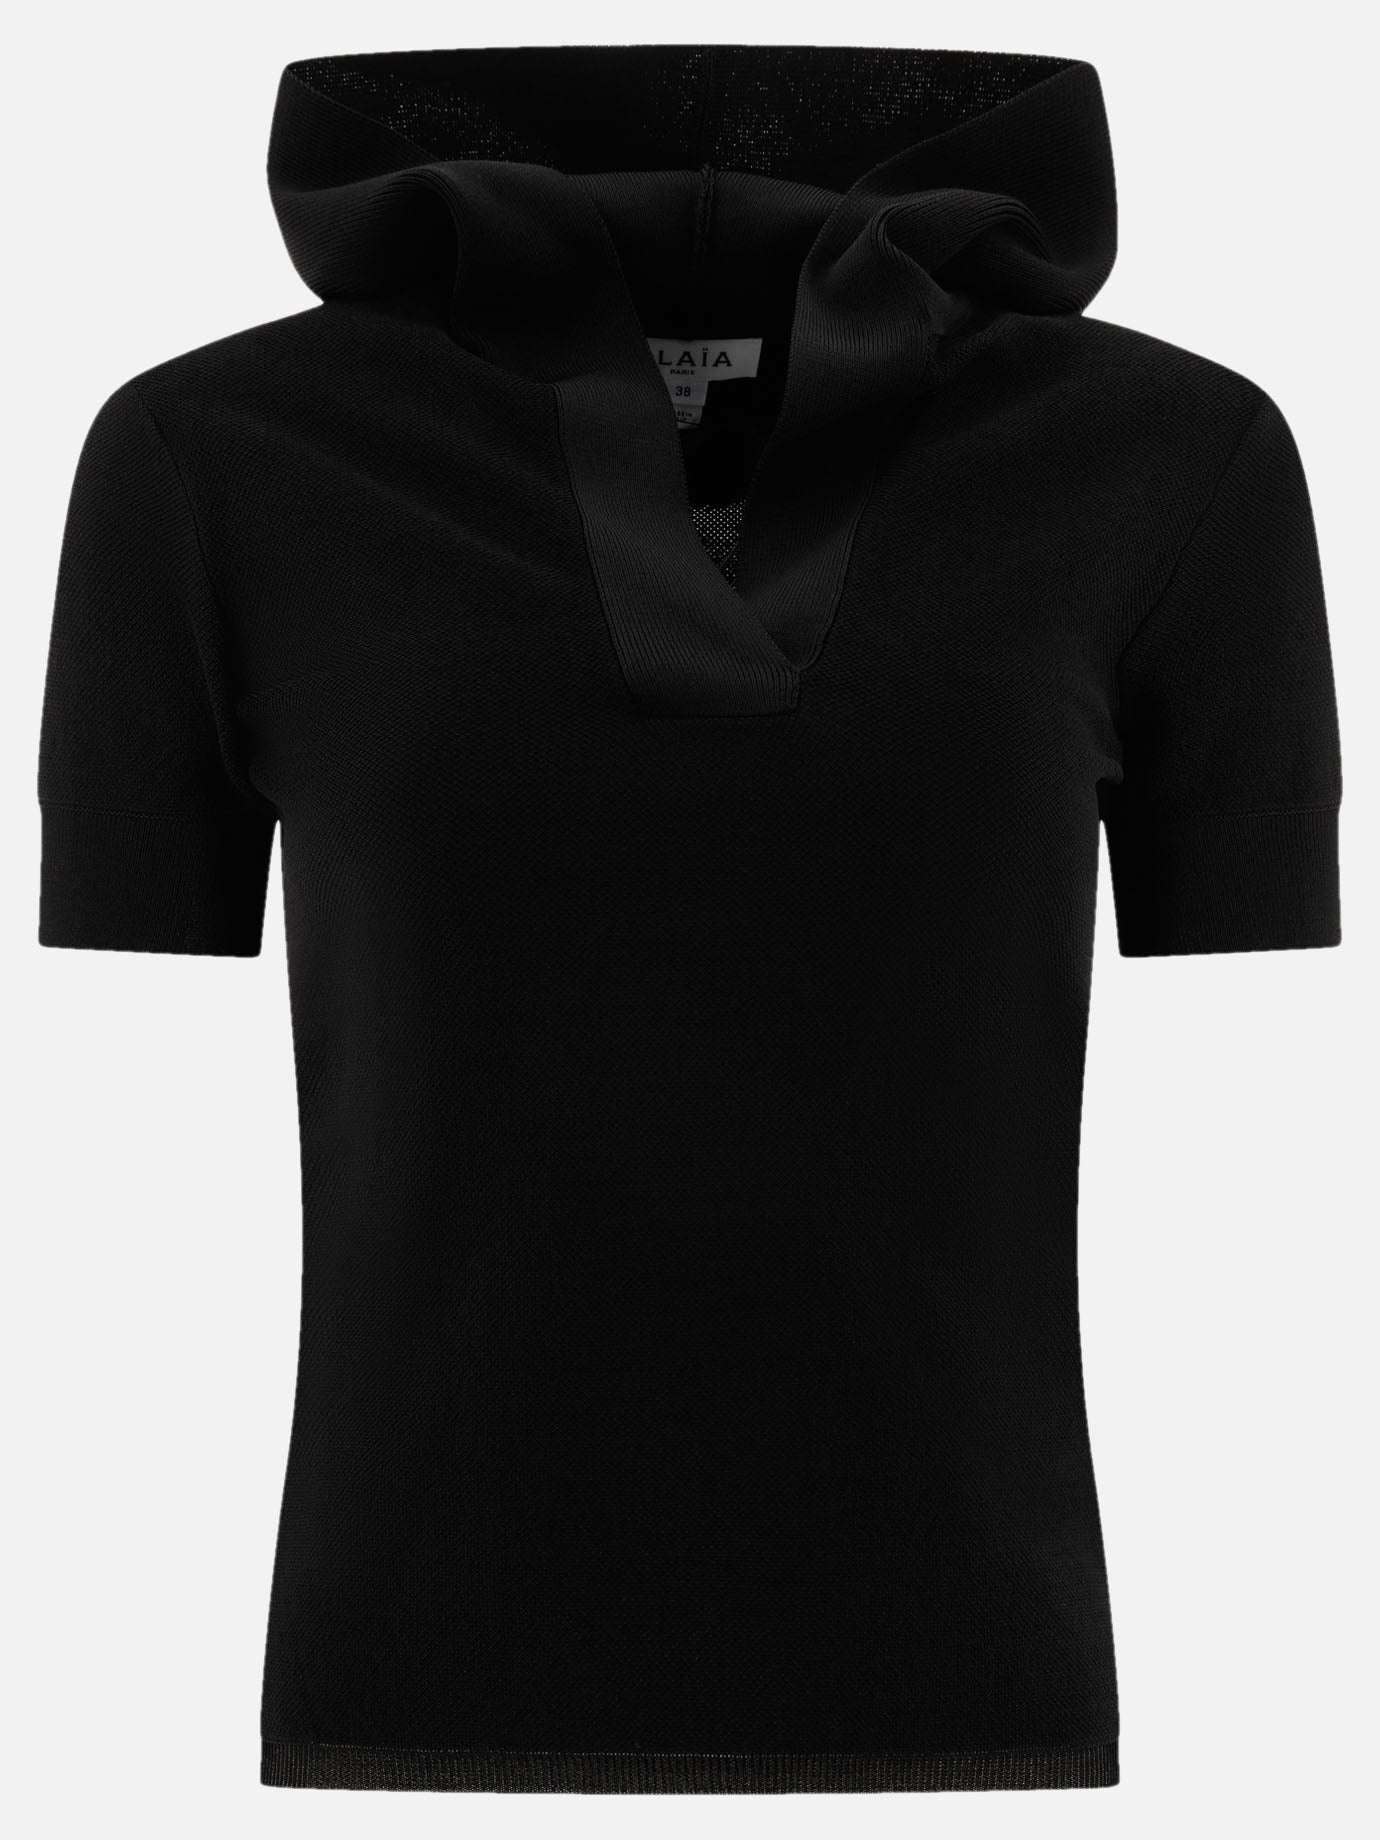 Alaïa Pique knit hooded top Black